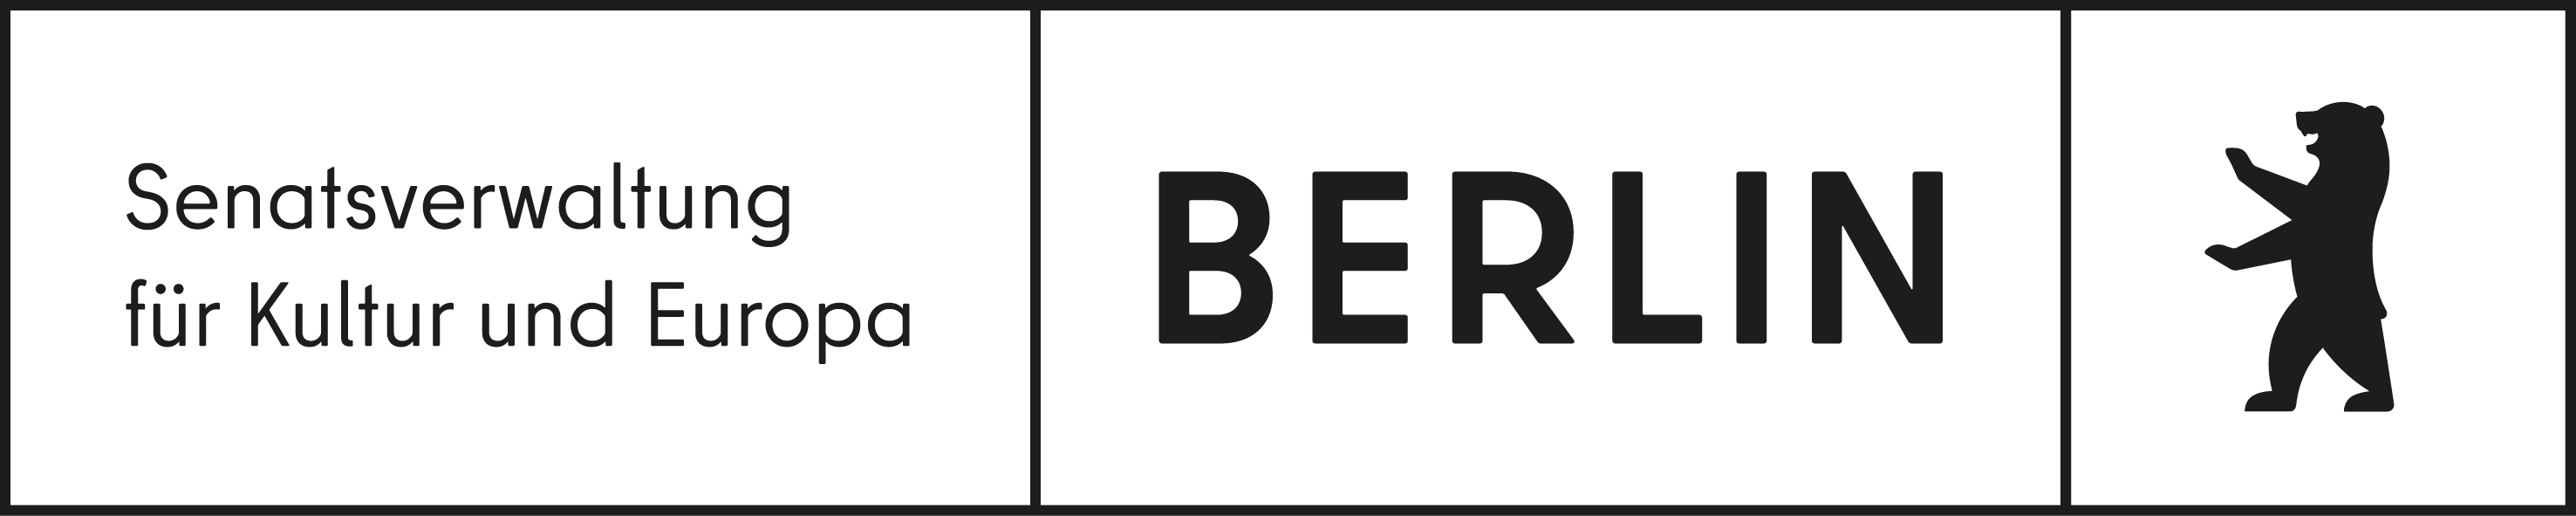 Logo Senate Department for Culture and Europe Berlin